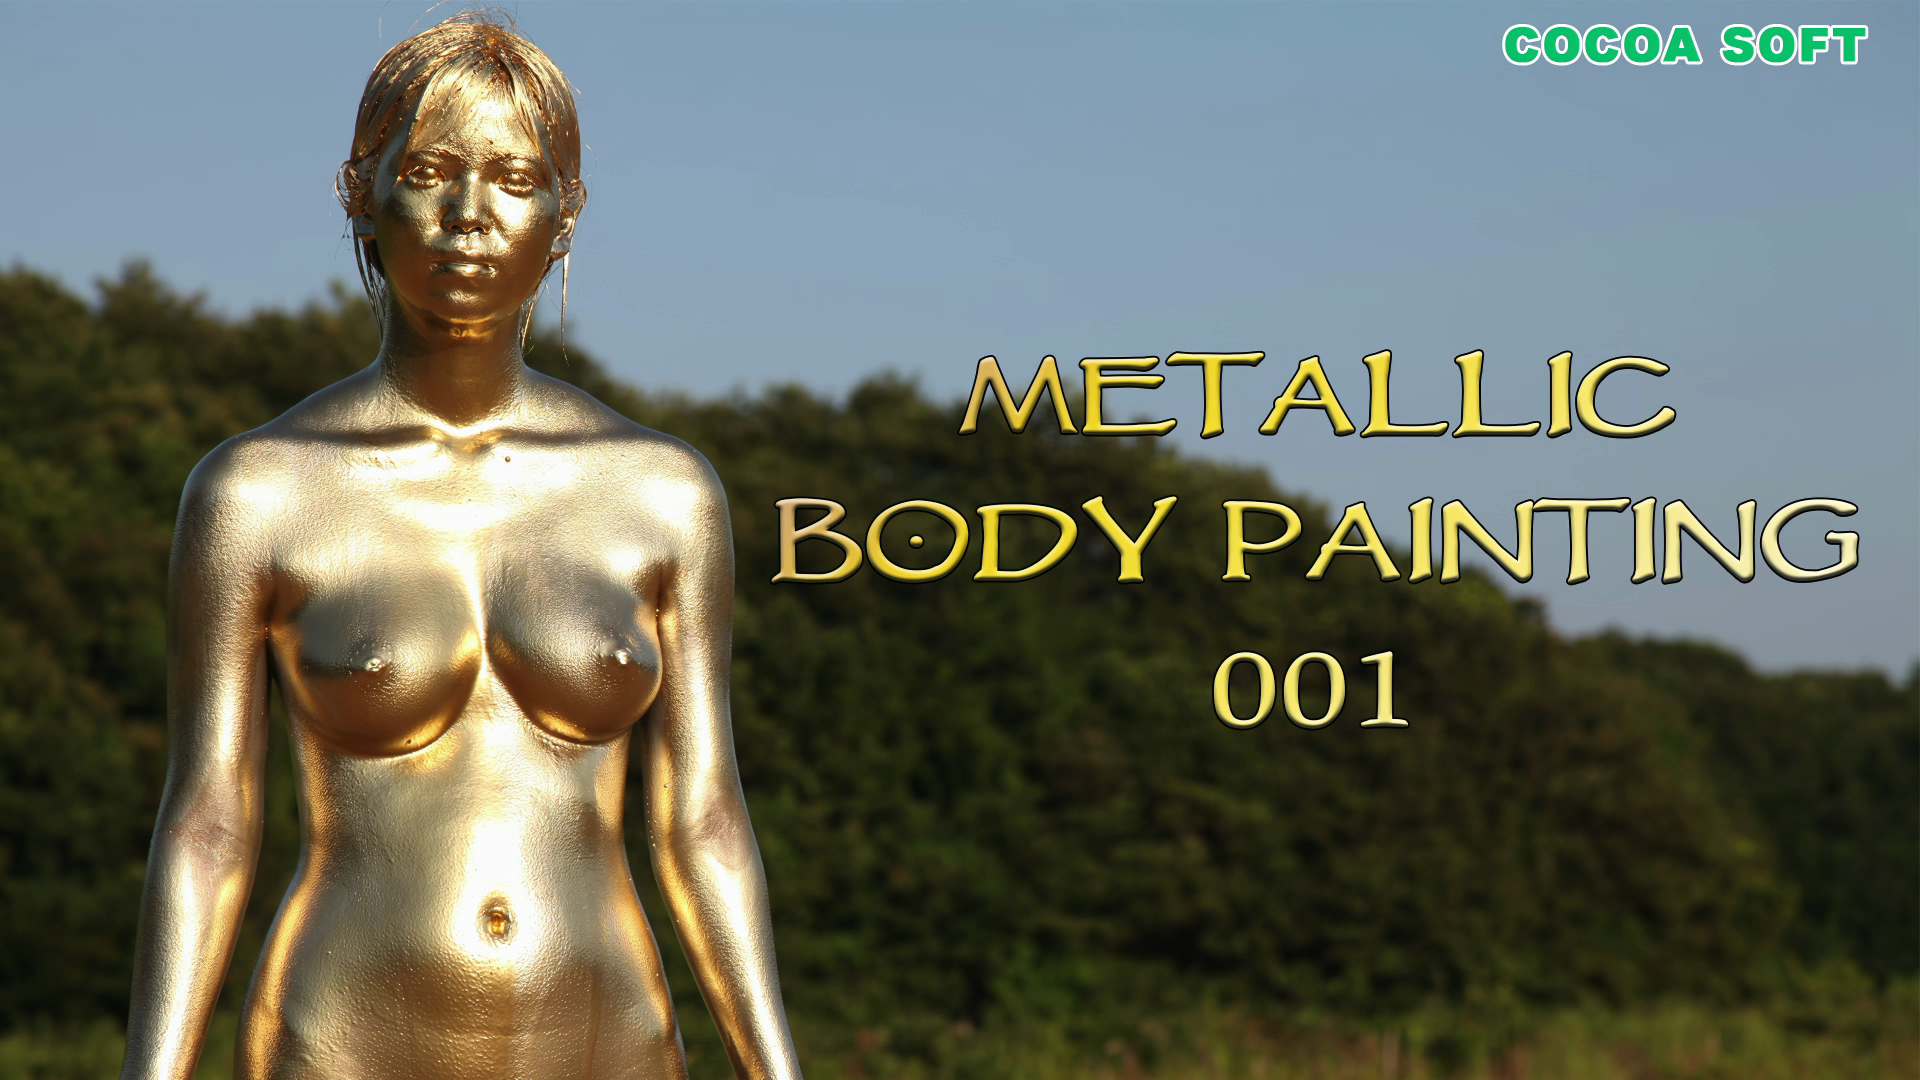 METALLIC BODY PAINTING 001